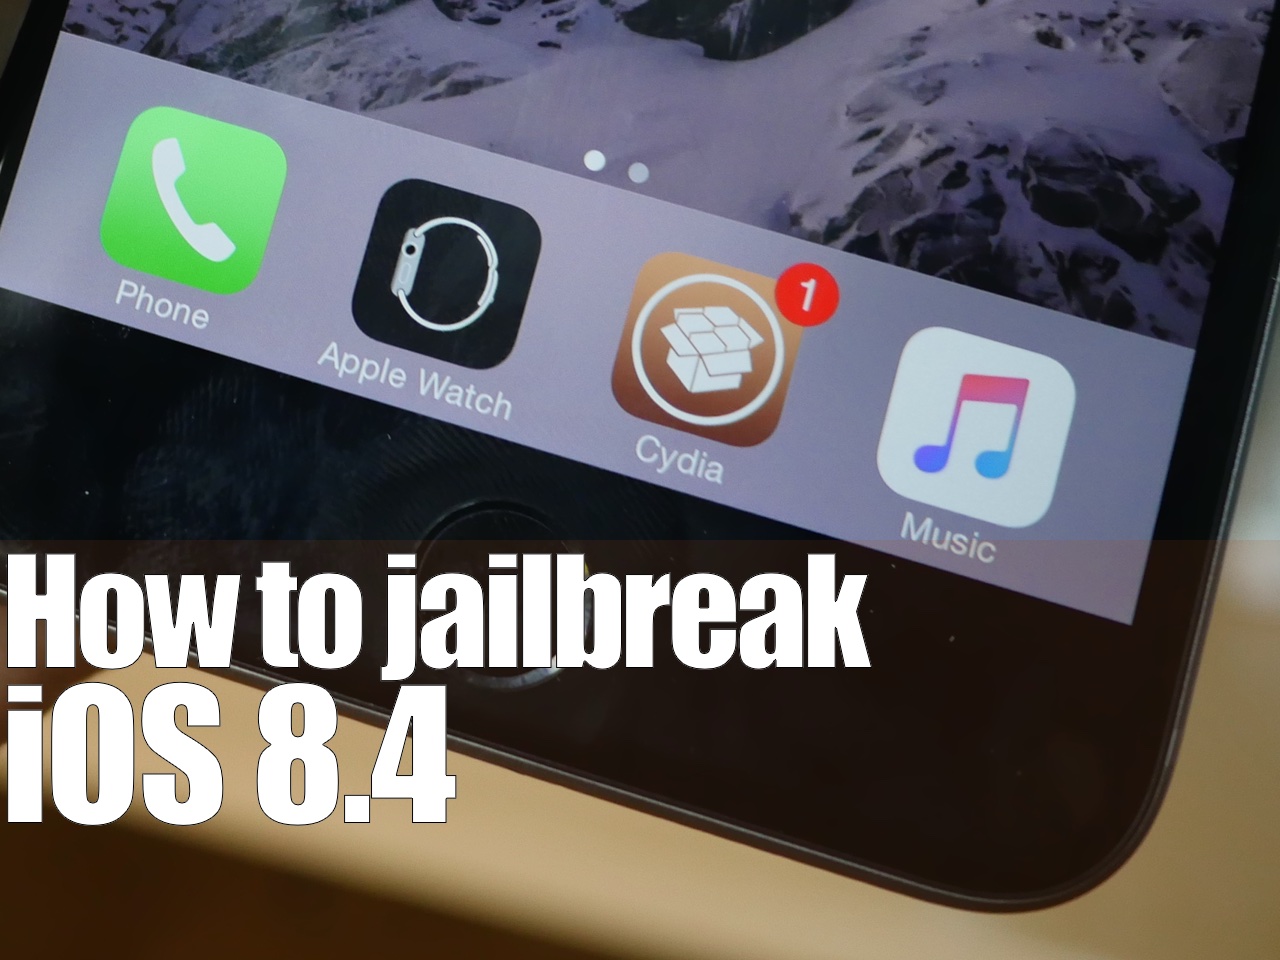 jailbreak iphone 56.1.4